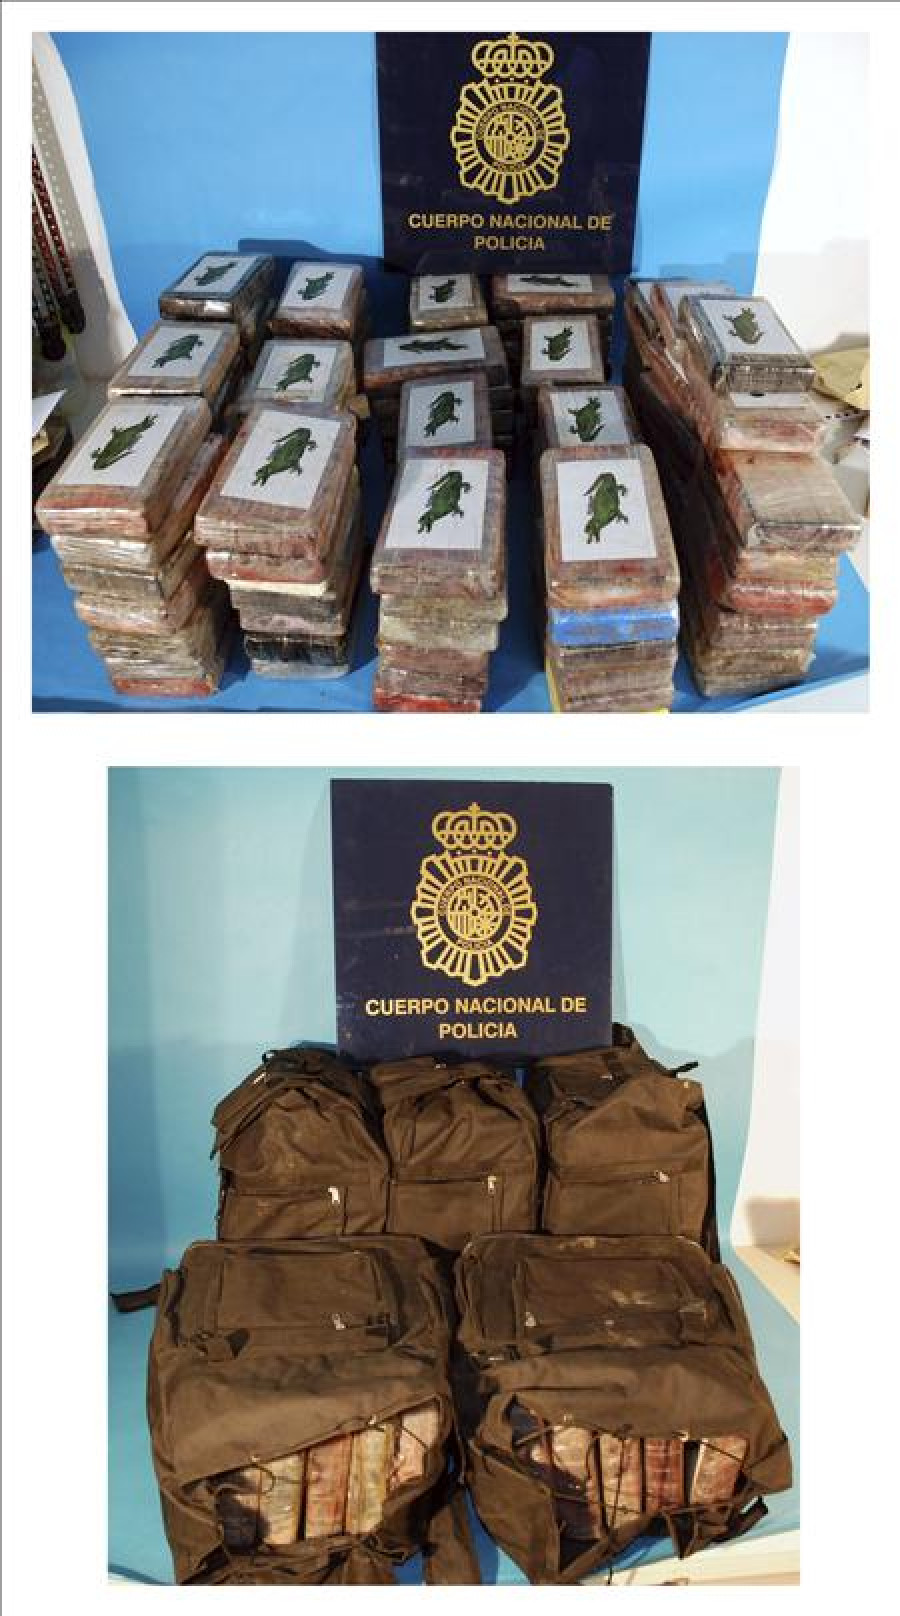 Interceptados en Marín 100 kilos de cocaína ocultos en cajas de plátanos